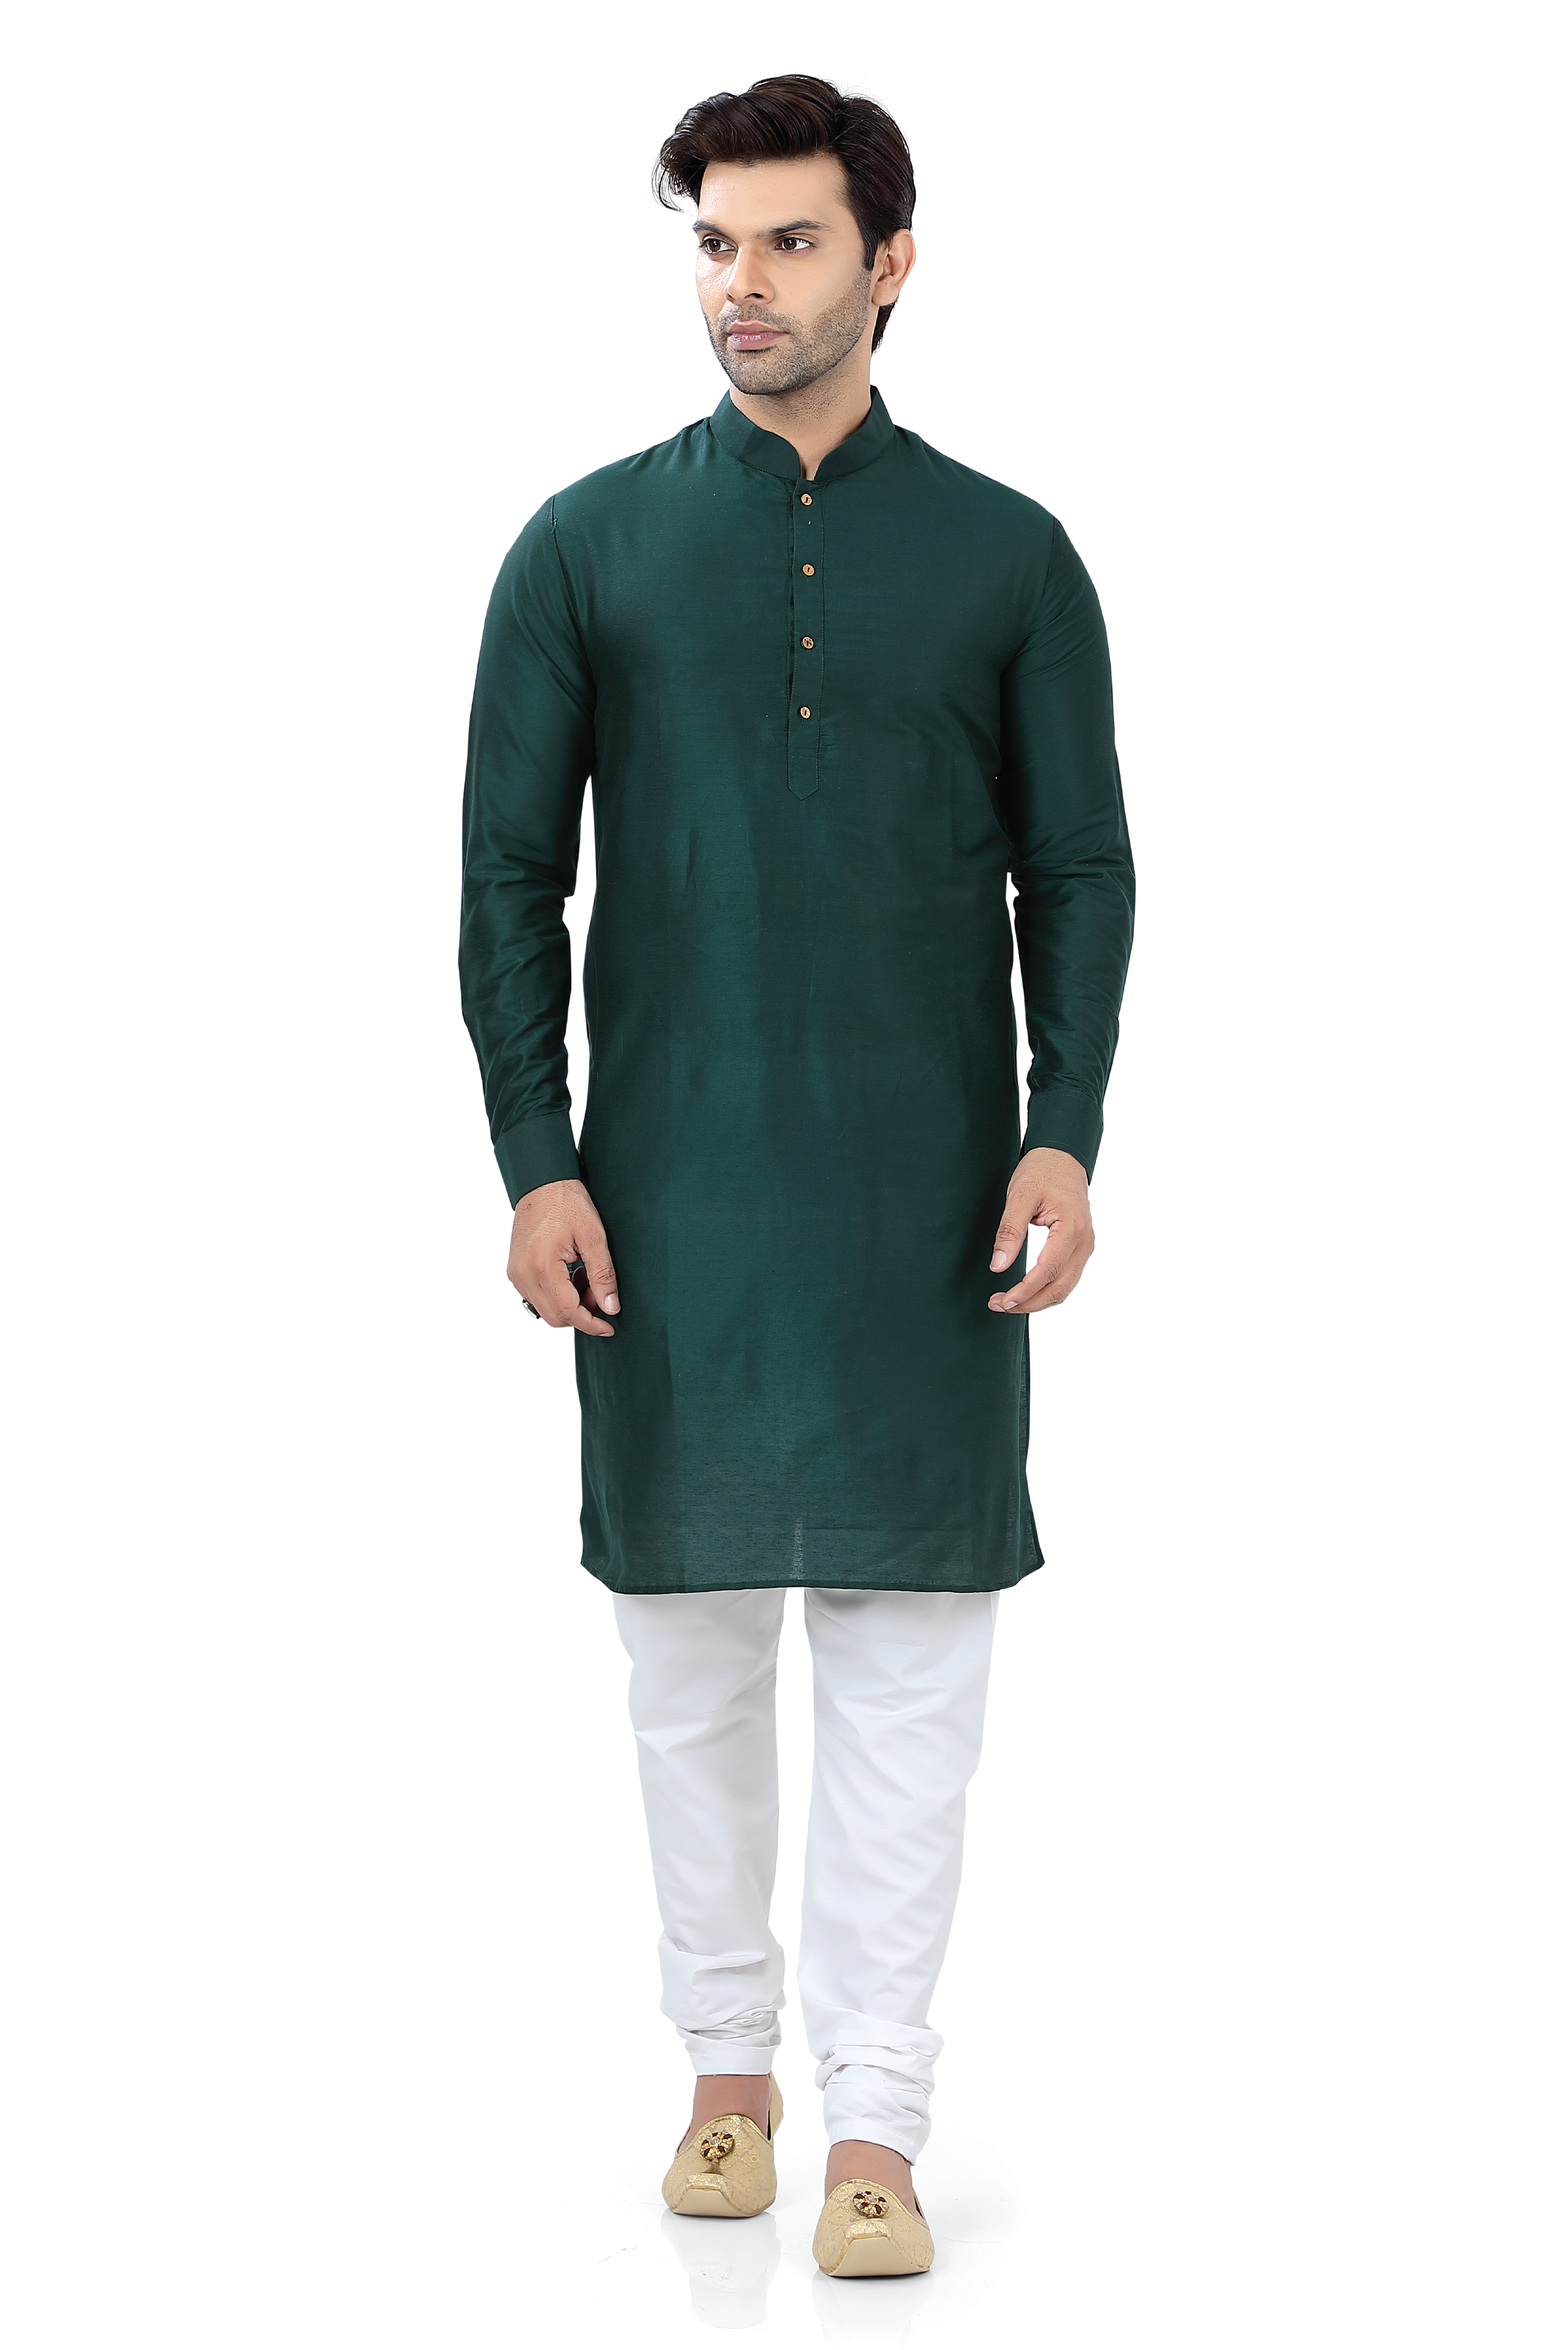 Soft Cotton Silk Kurta Pajama in Bottle Green Color - (MHPC101BG)